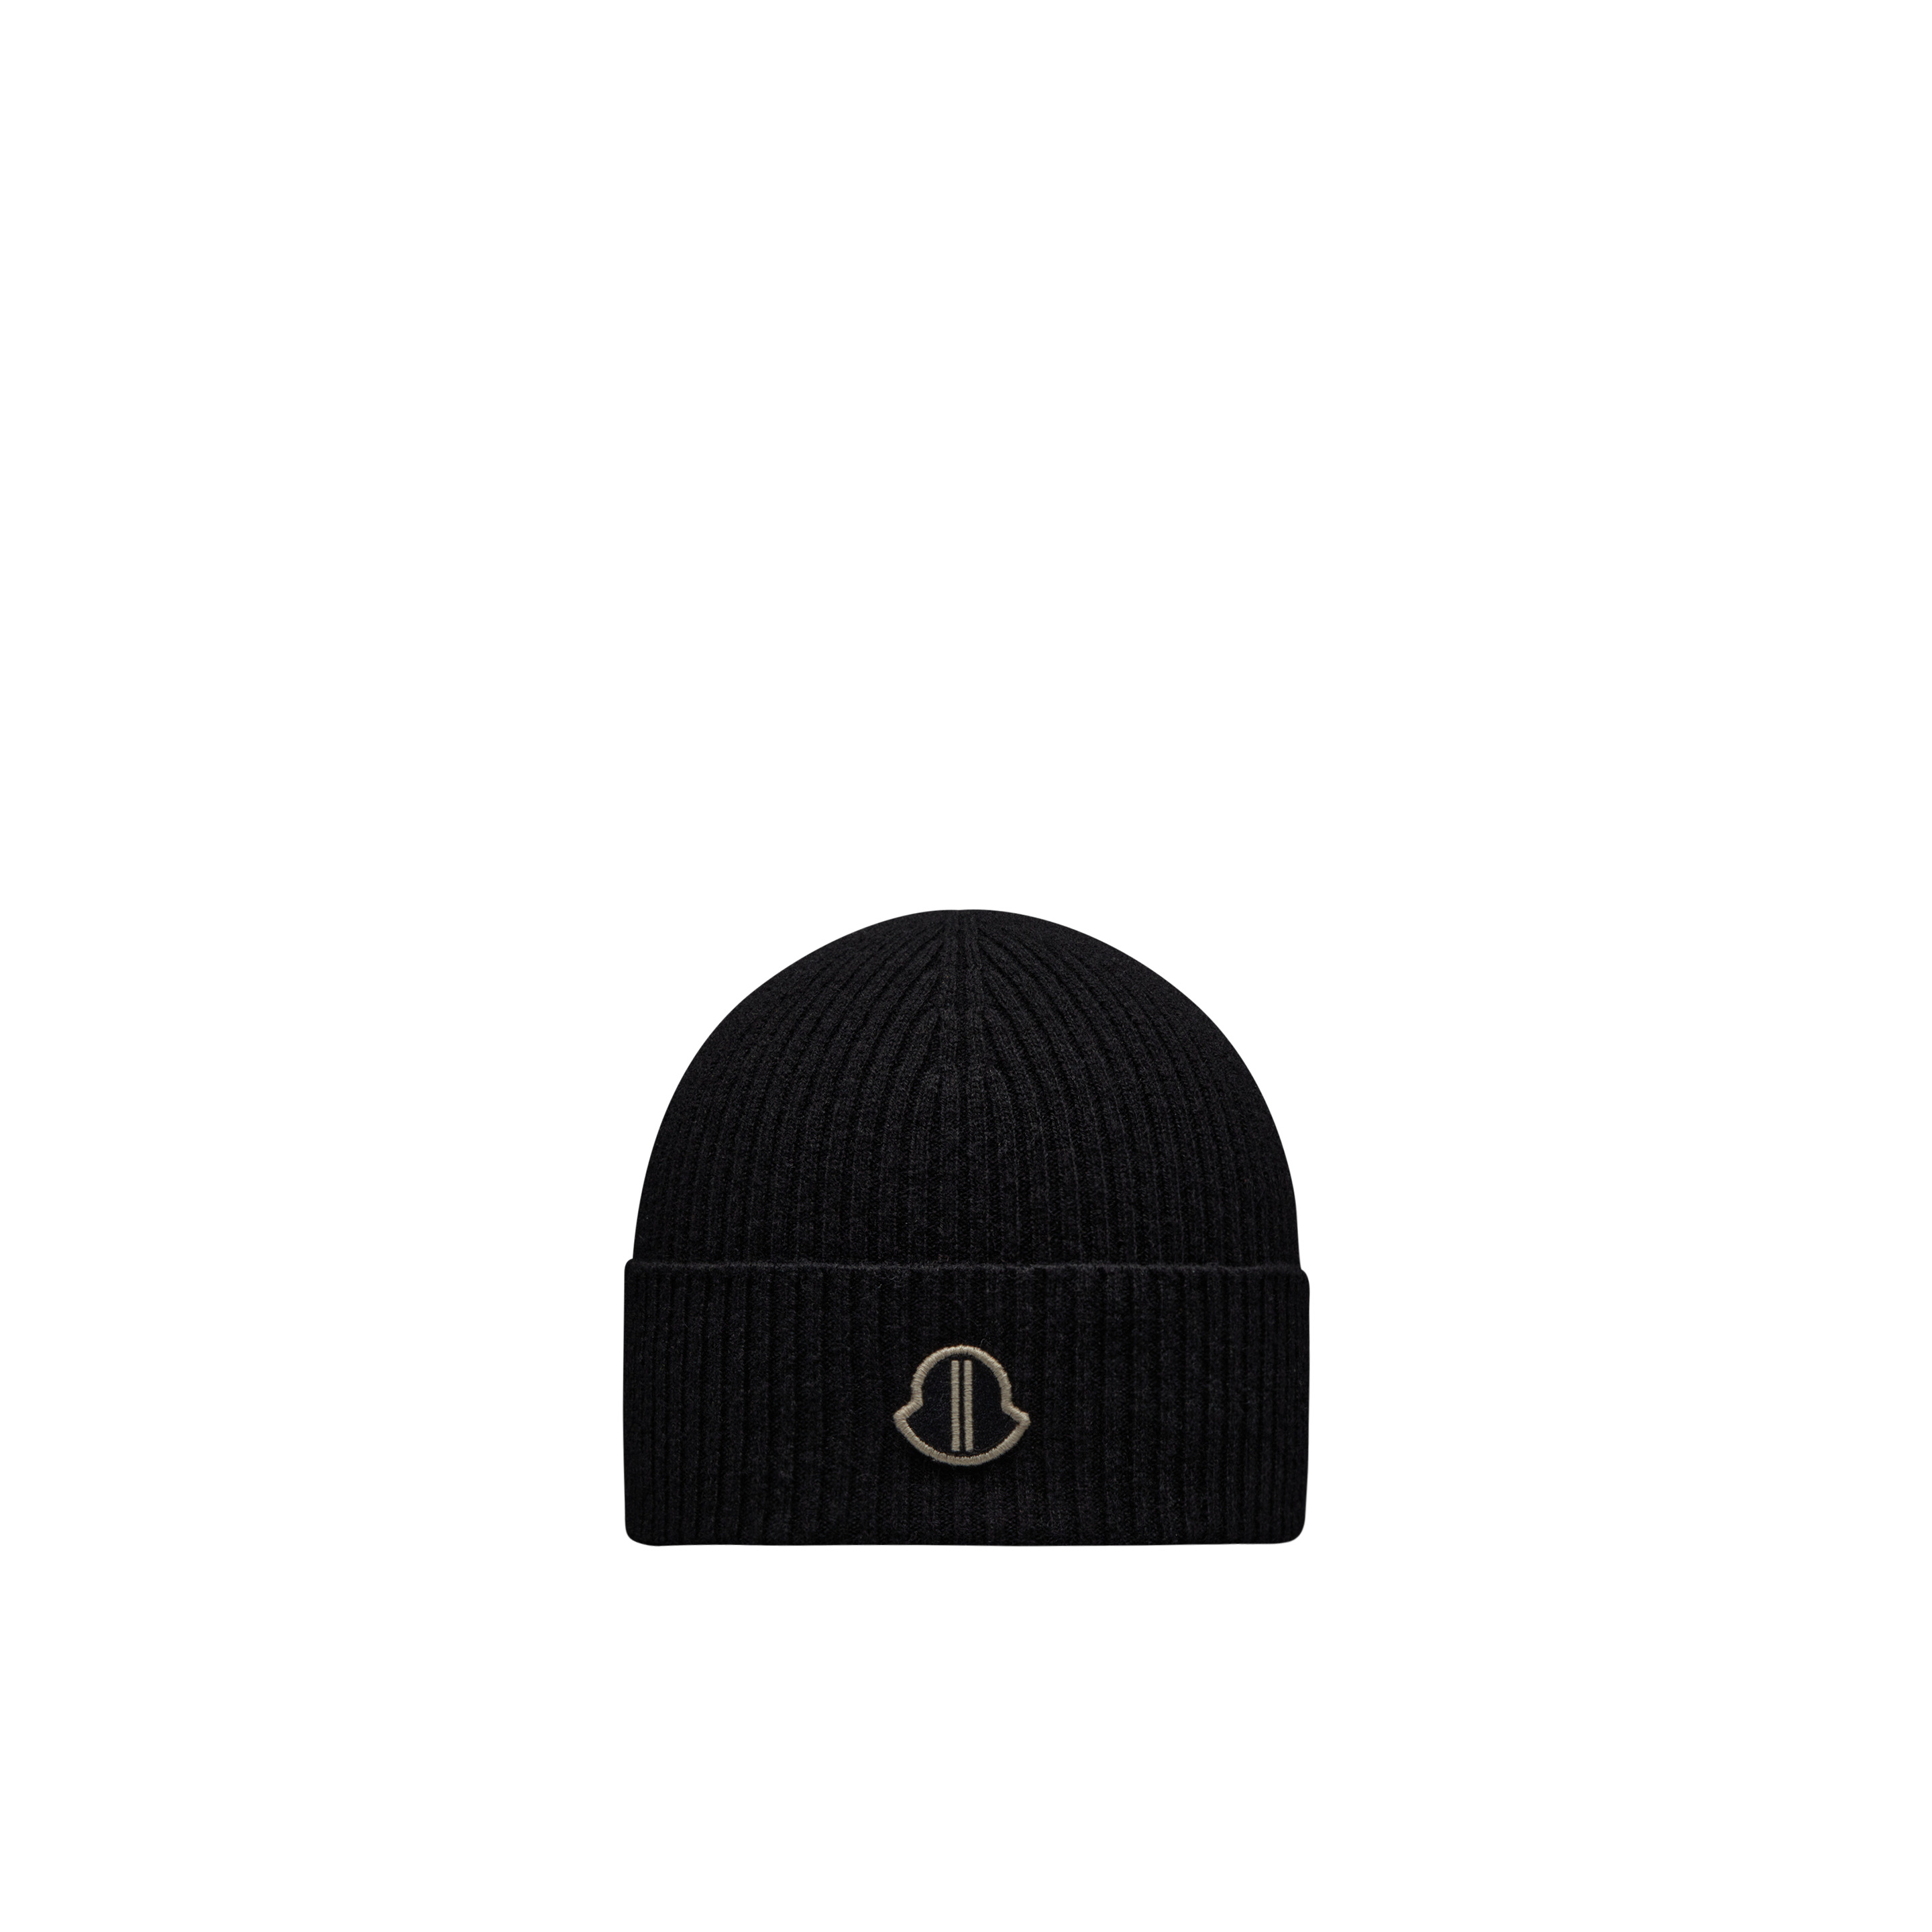 Moncler x Rick Owens Beanie Knit Hat in Black - 1